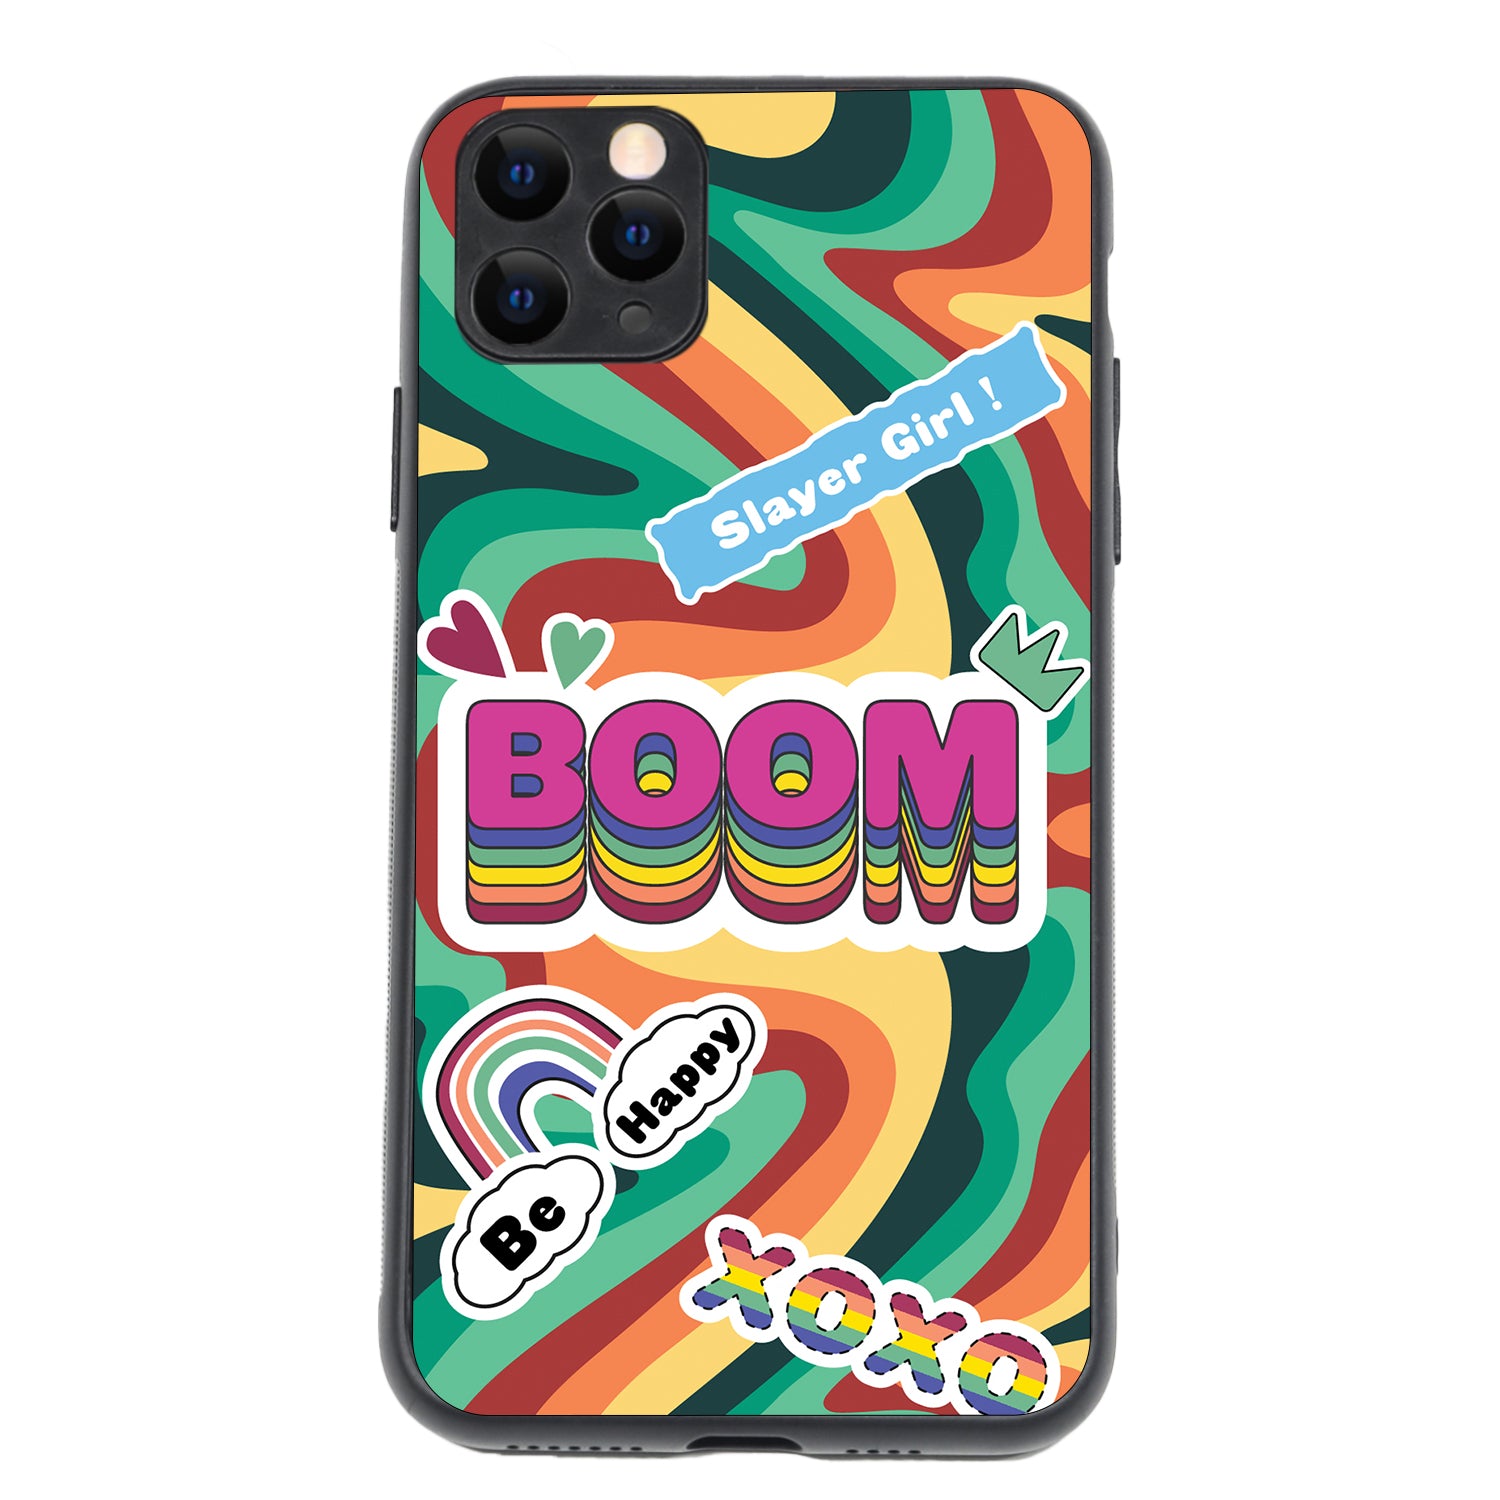 Boom Women Empowerment iPhone 11 Pro Max Case